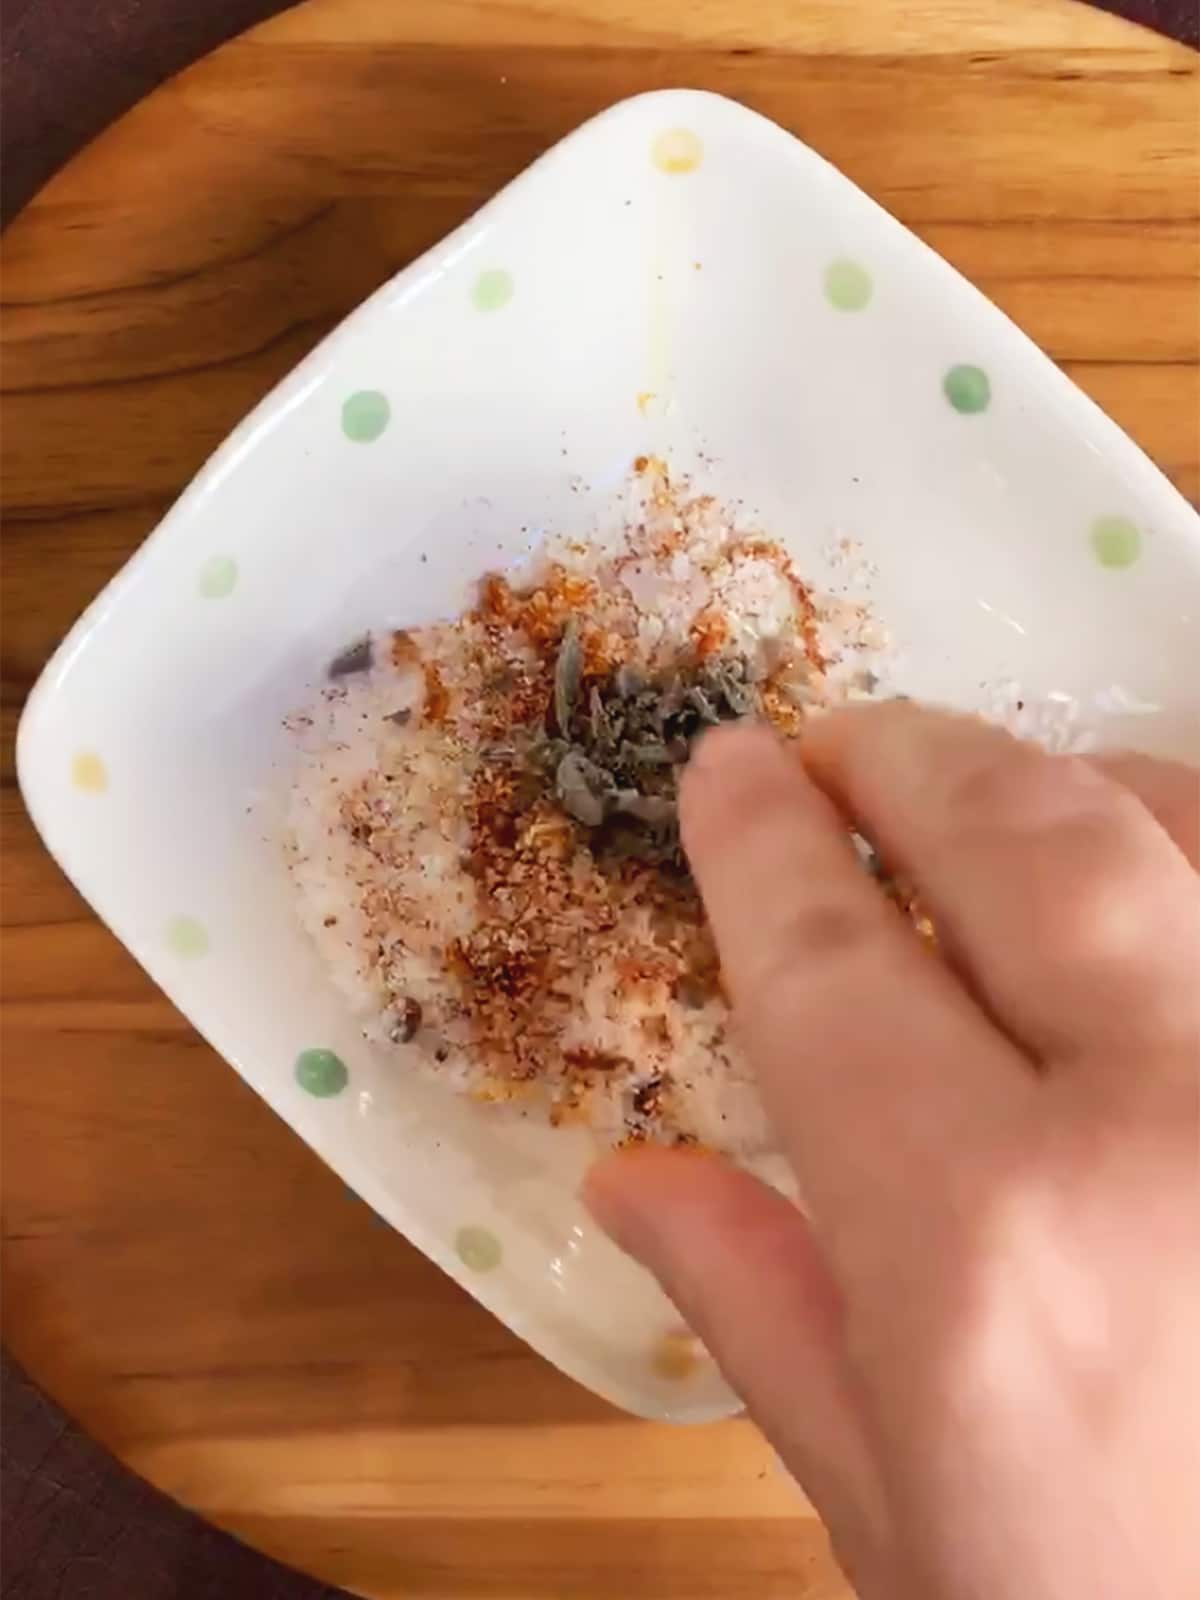 Hand mixing dry brine ingredients - salt, paprika, orange zest and dried sage.